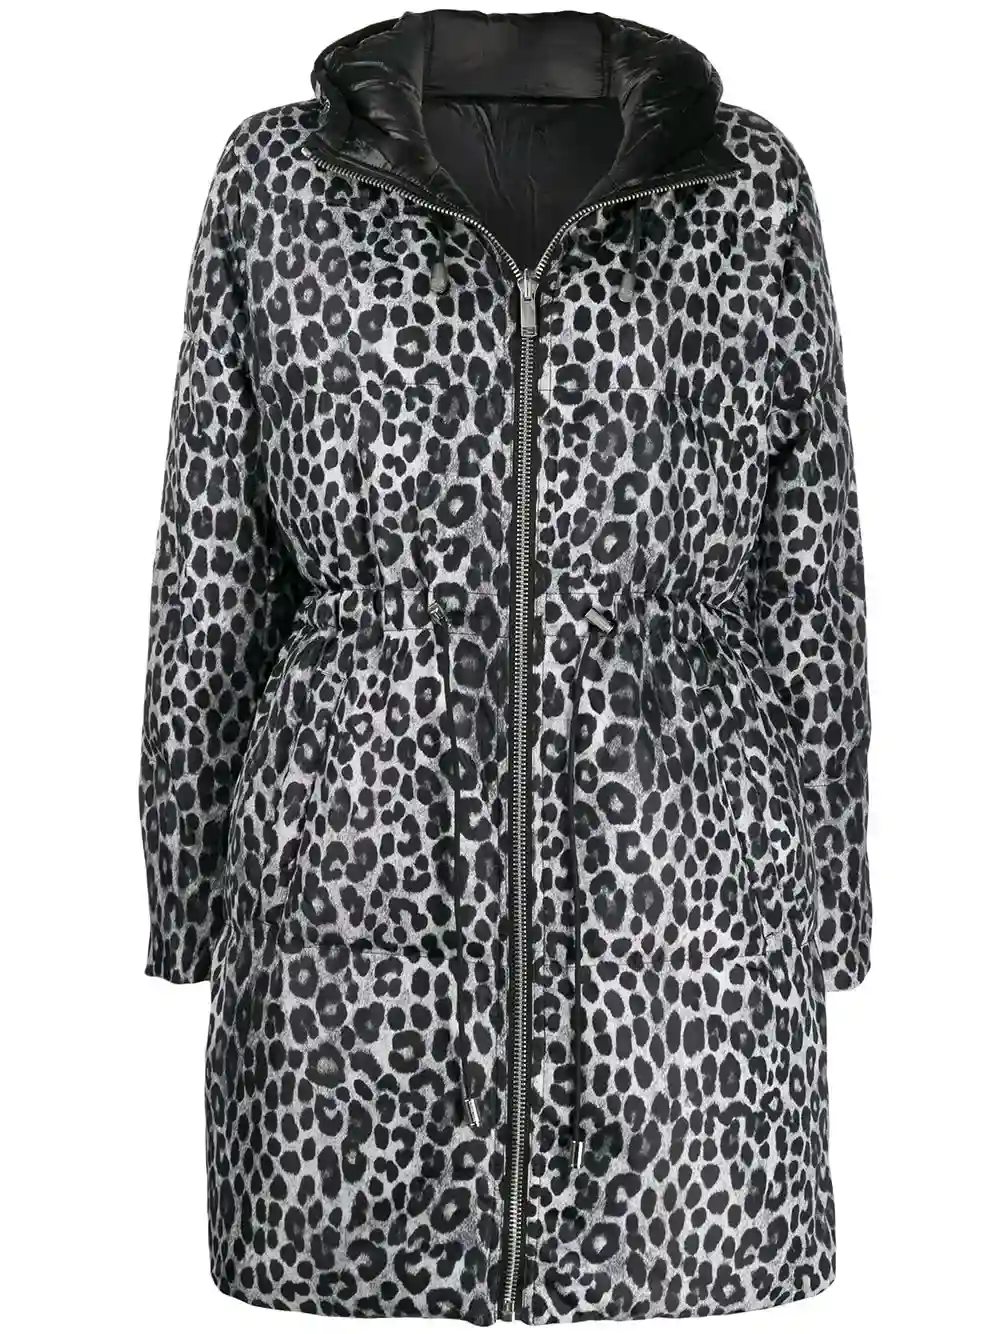 Women's Michael Kors Leopard Print Puffer Coat